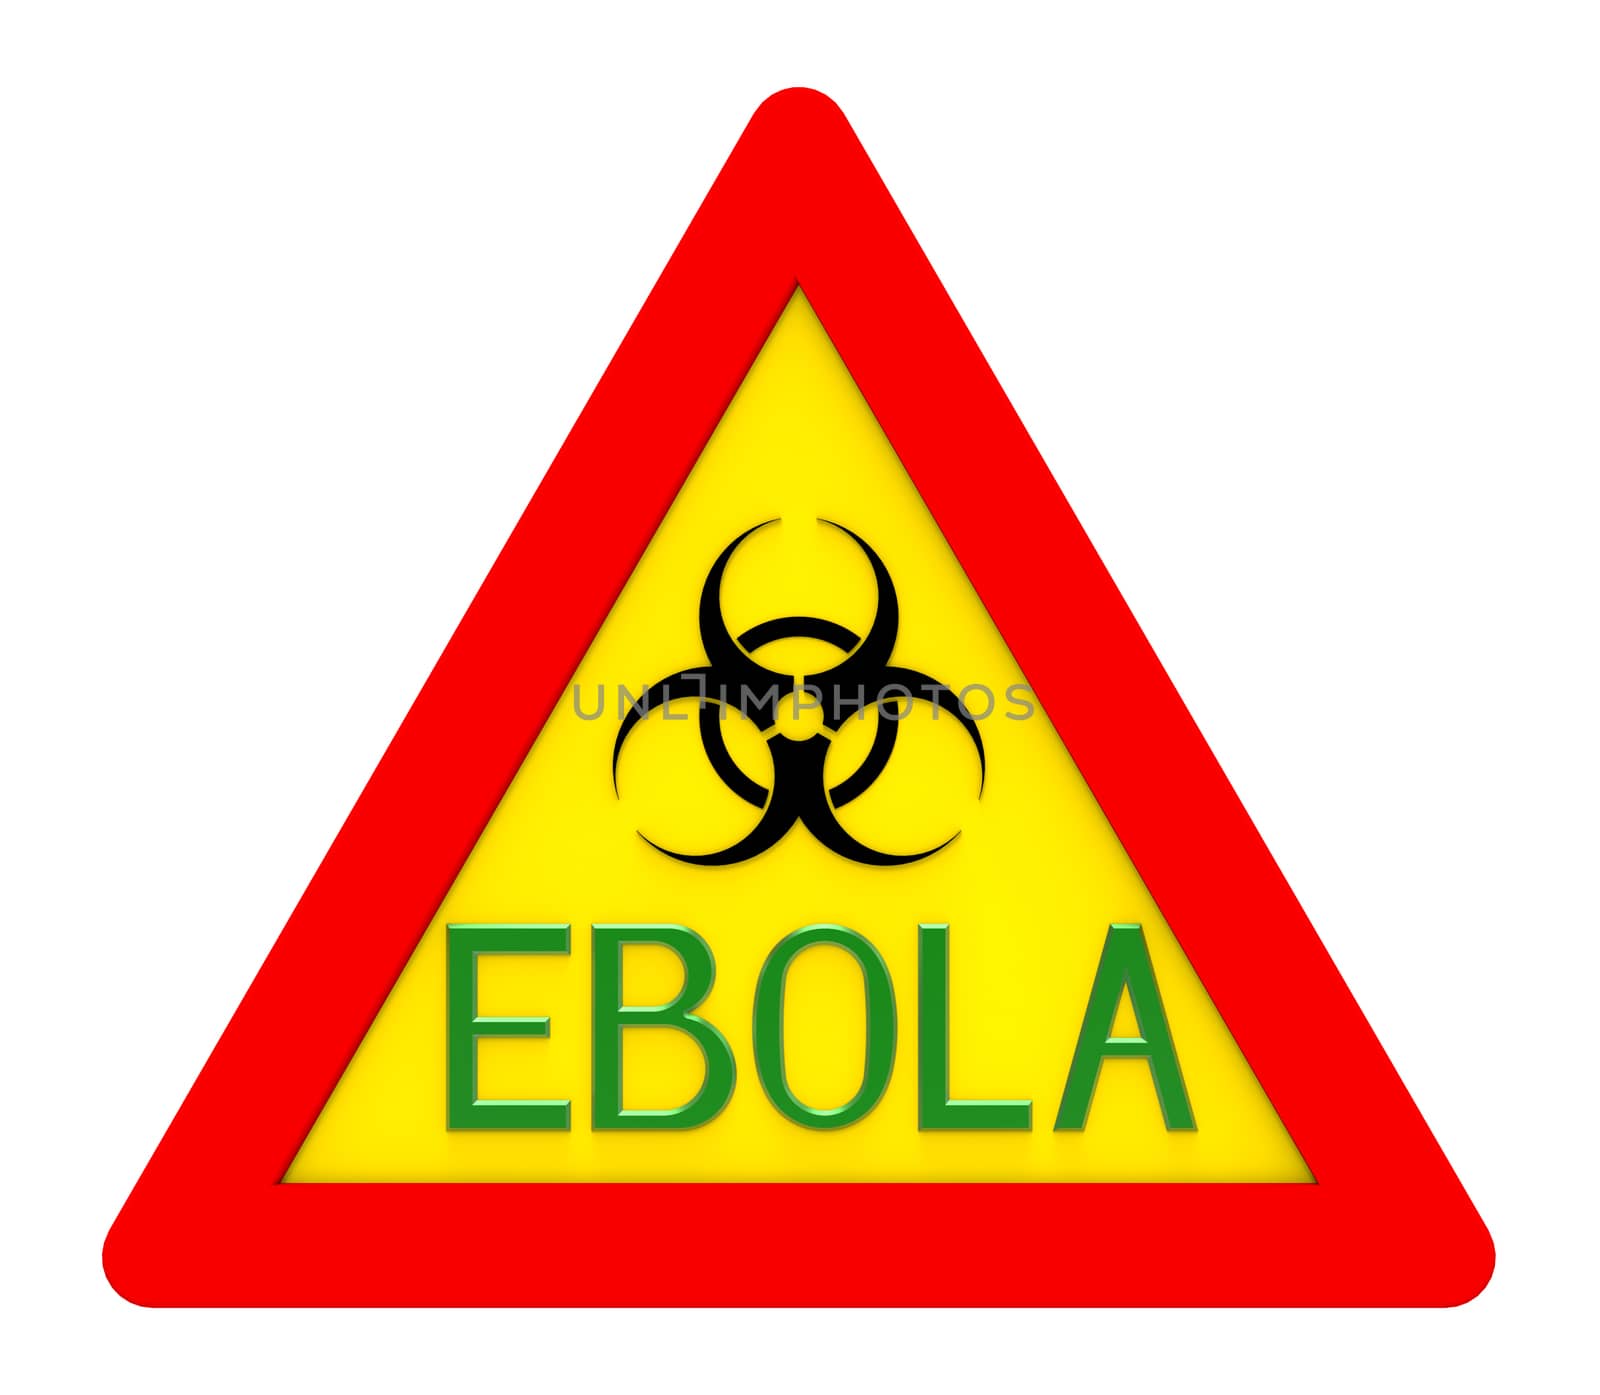 Ebola biohazard sign by Boris15